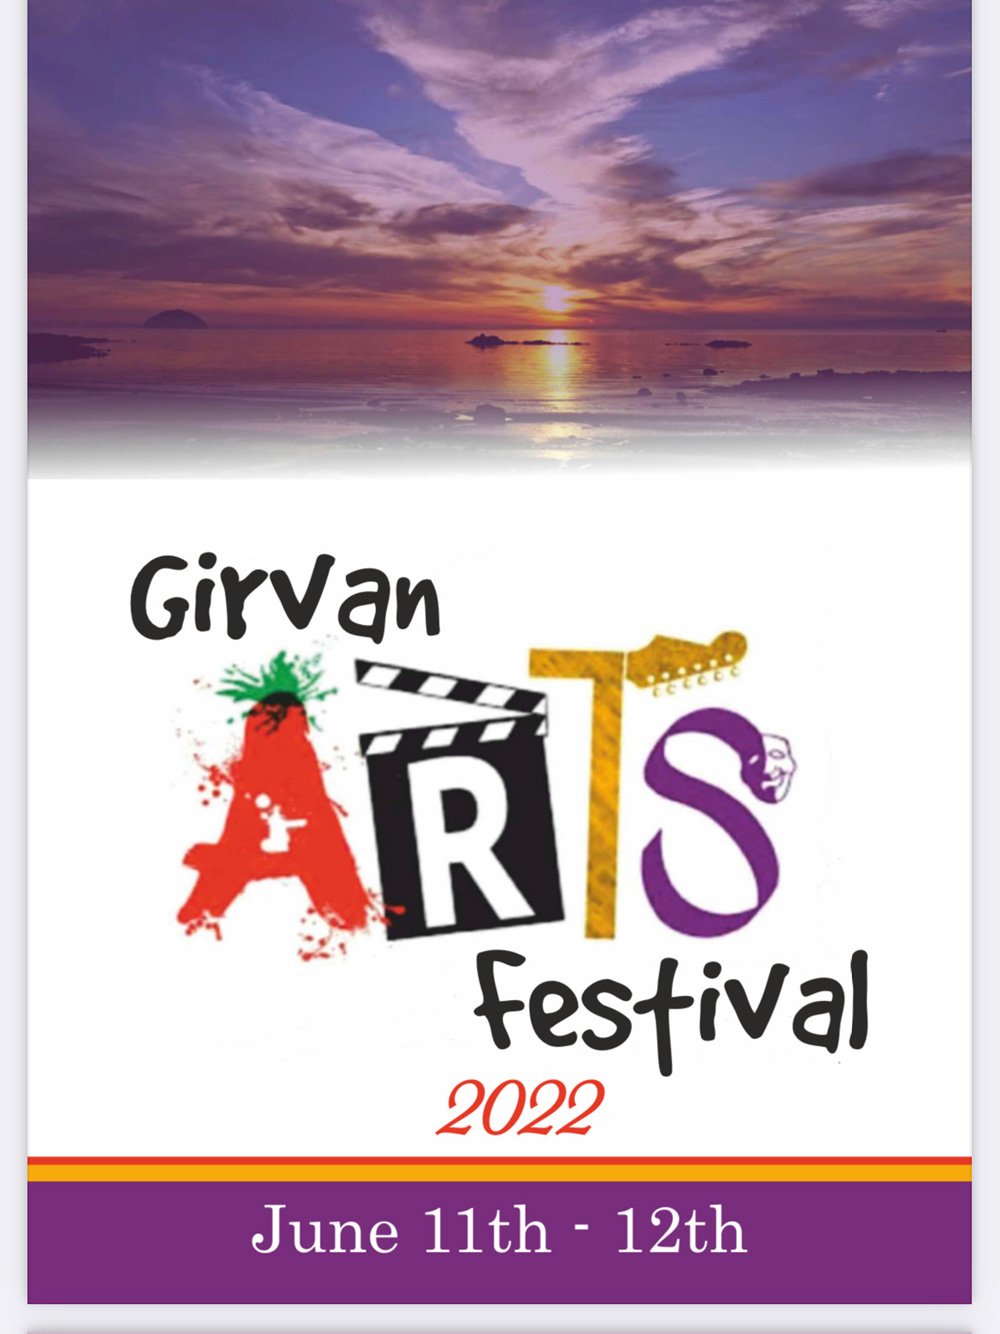 Girvan Arts Festival